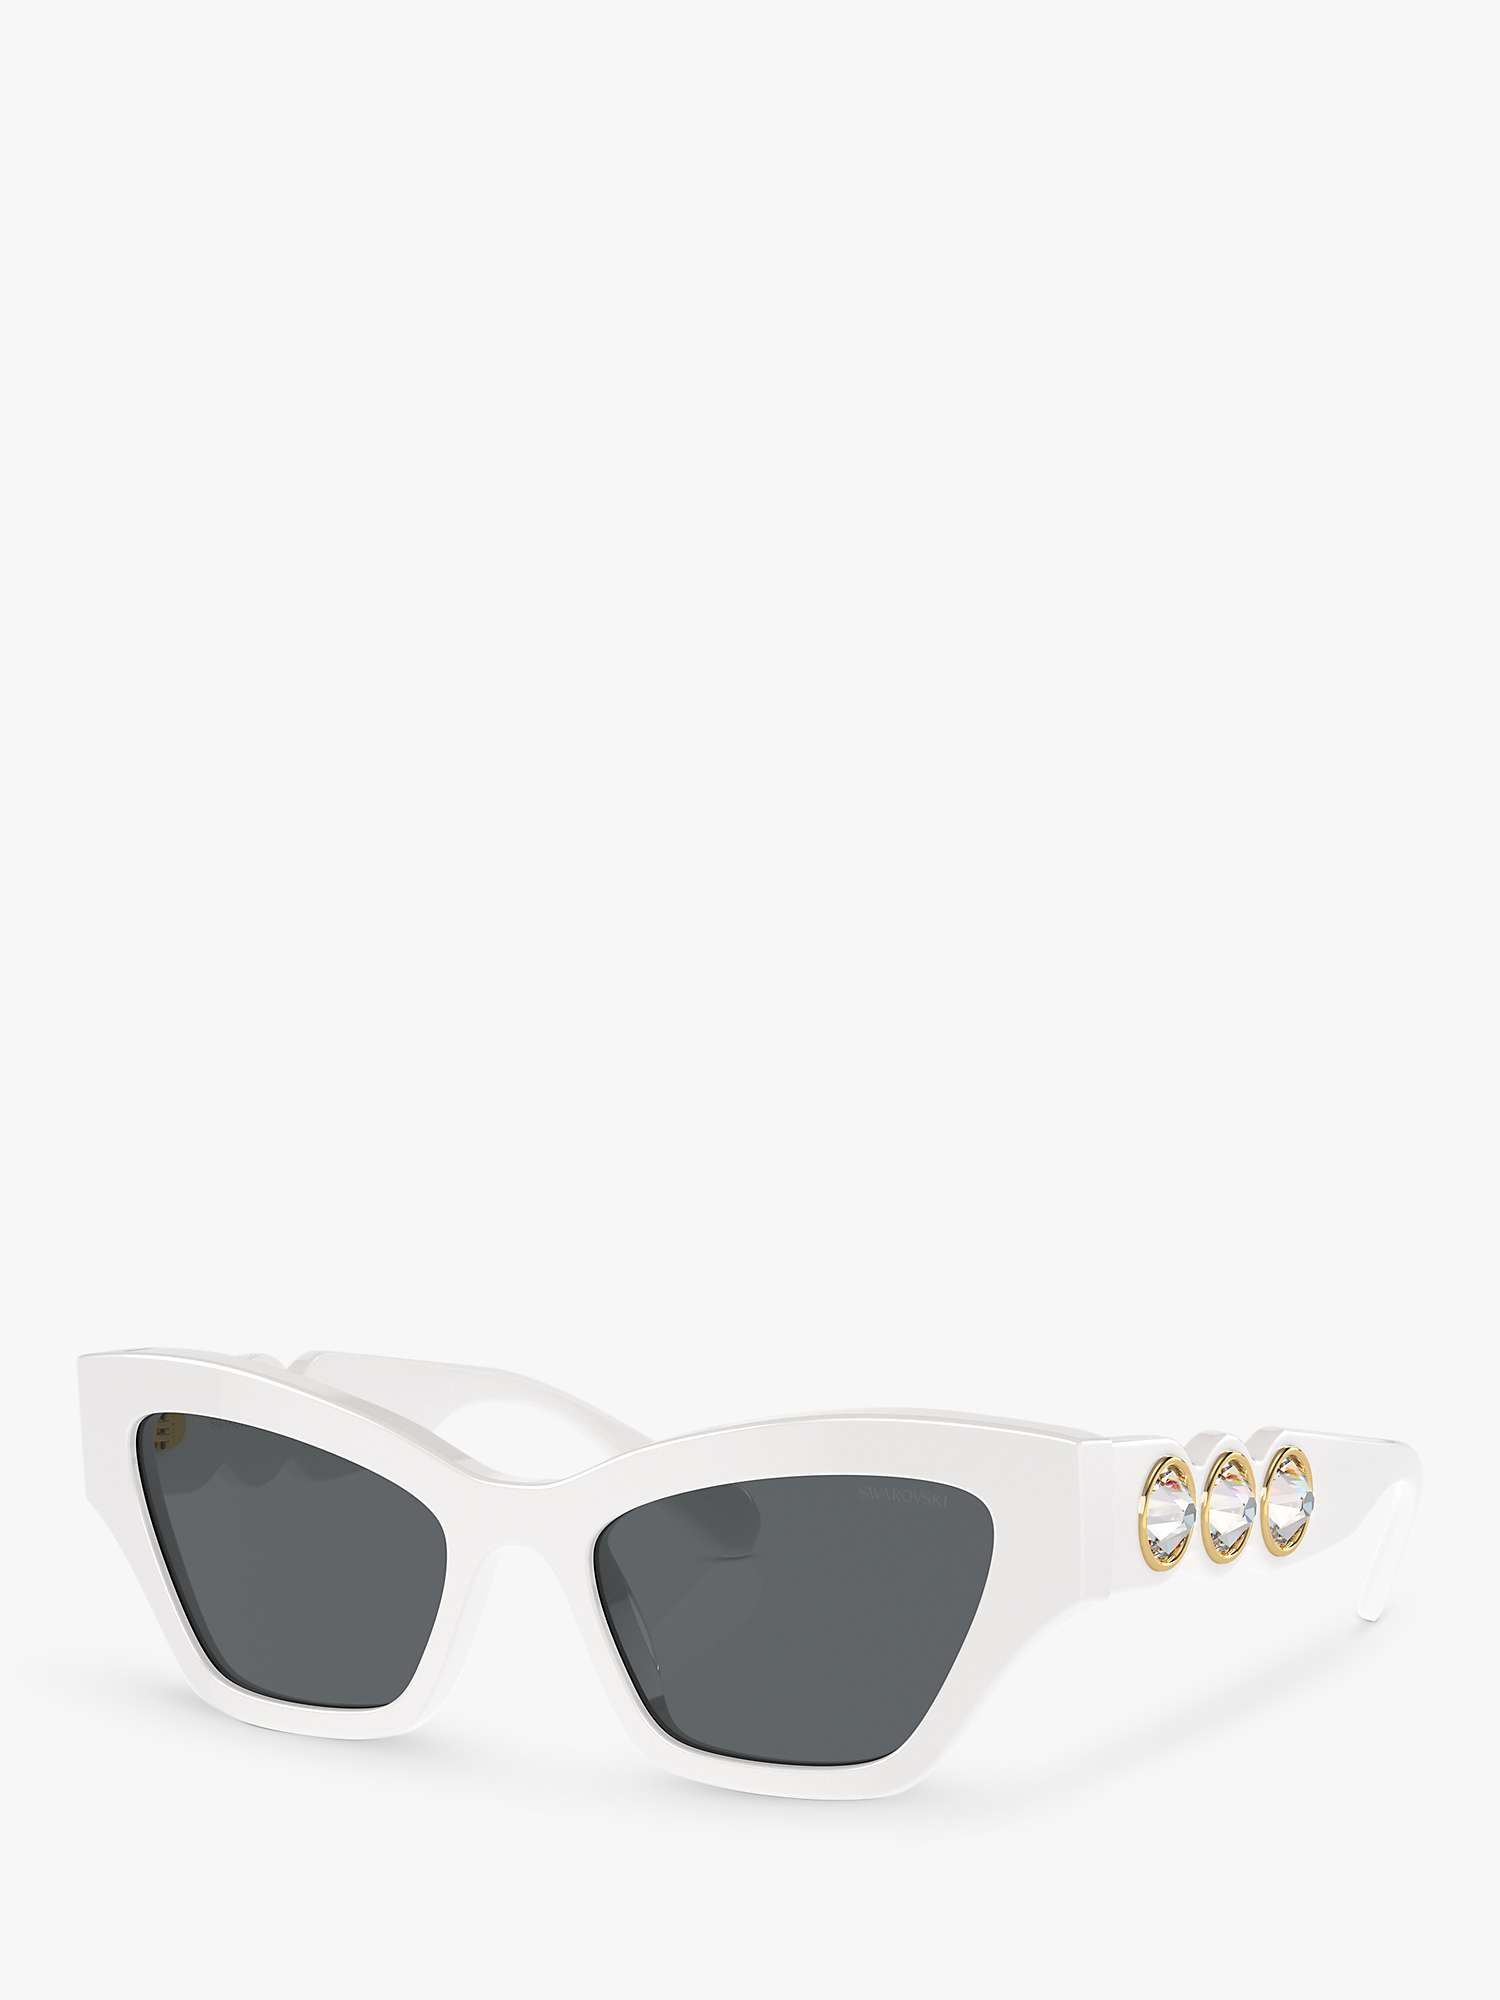 Buy Swarovski SK6021 Women's Cat's Eye Sunglasses, White/Grey Online at johnlewis.com